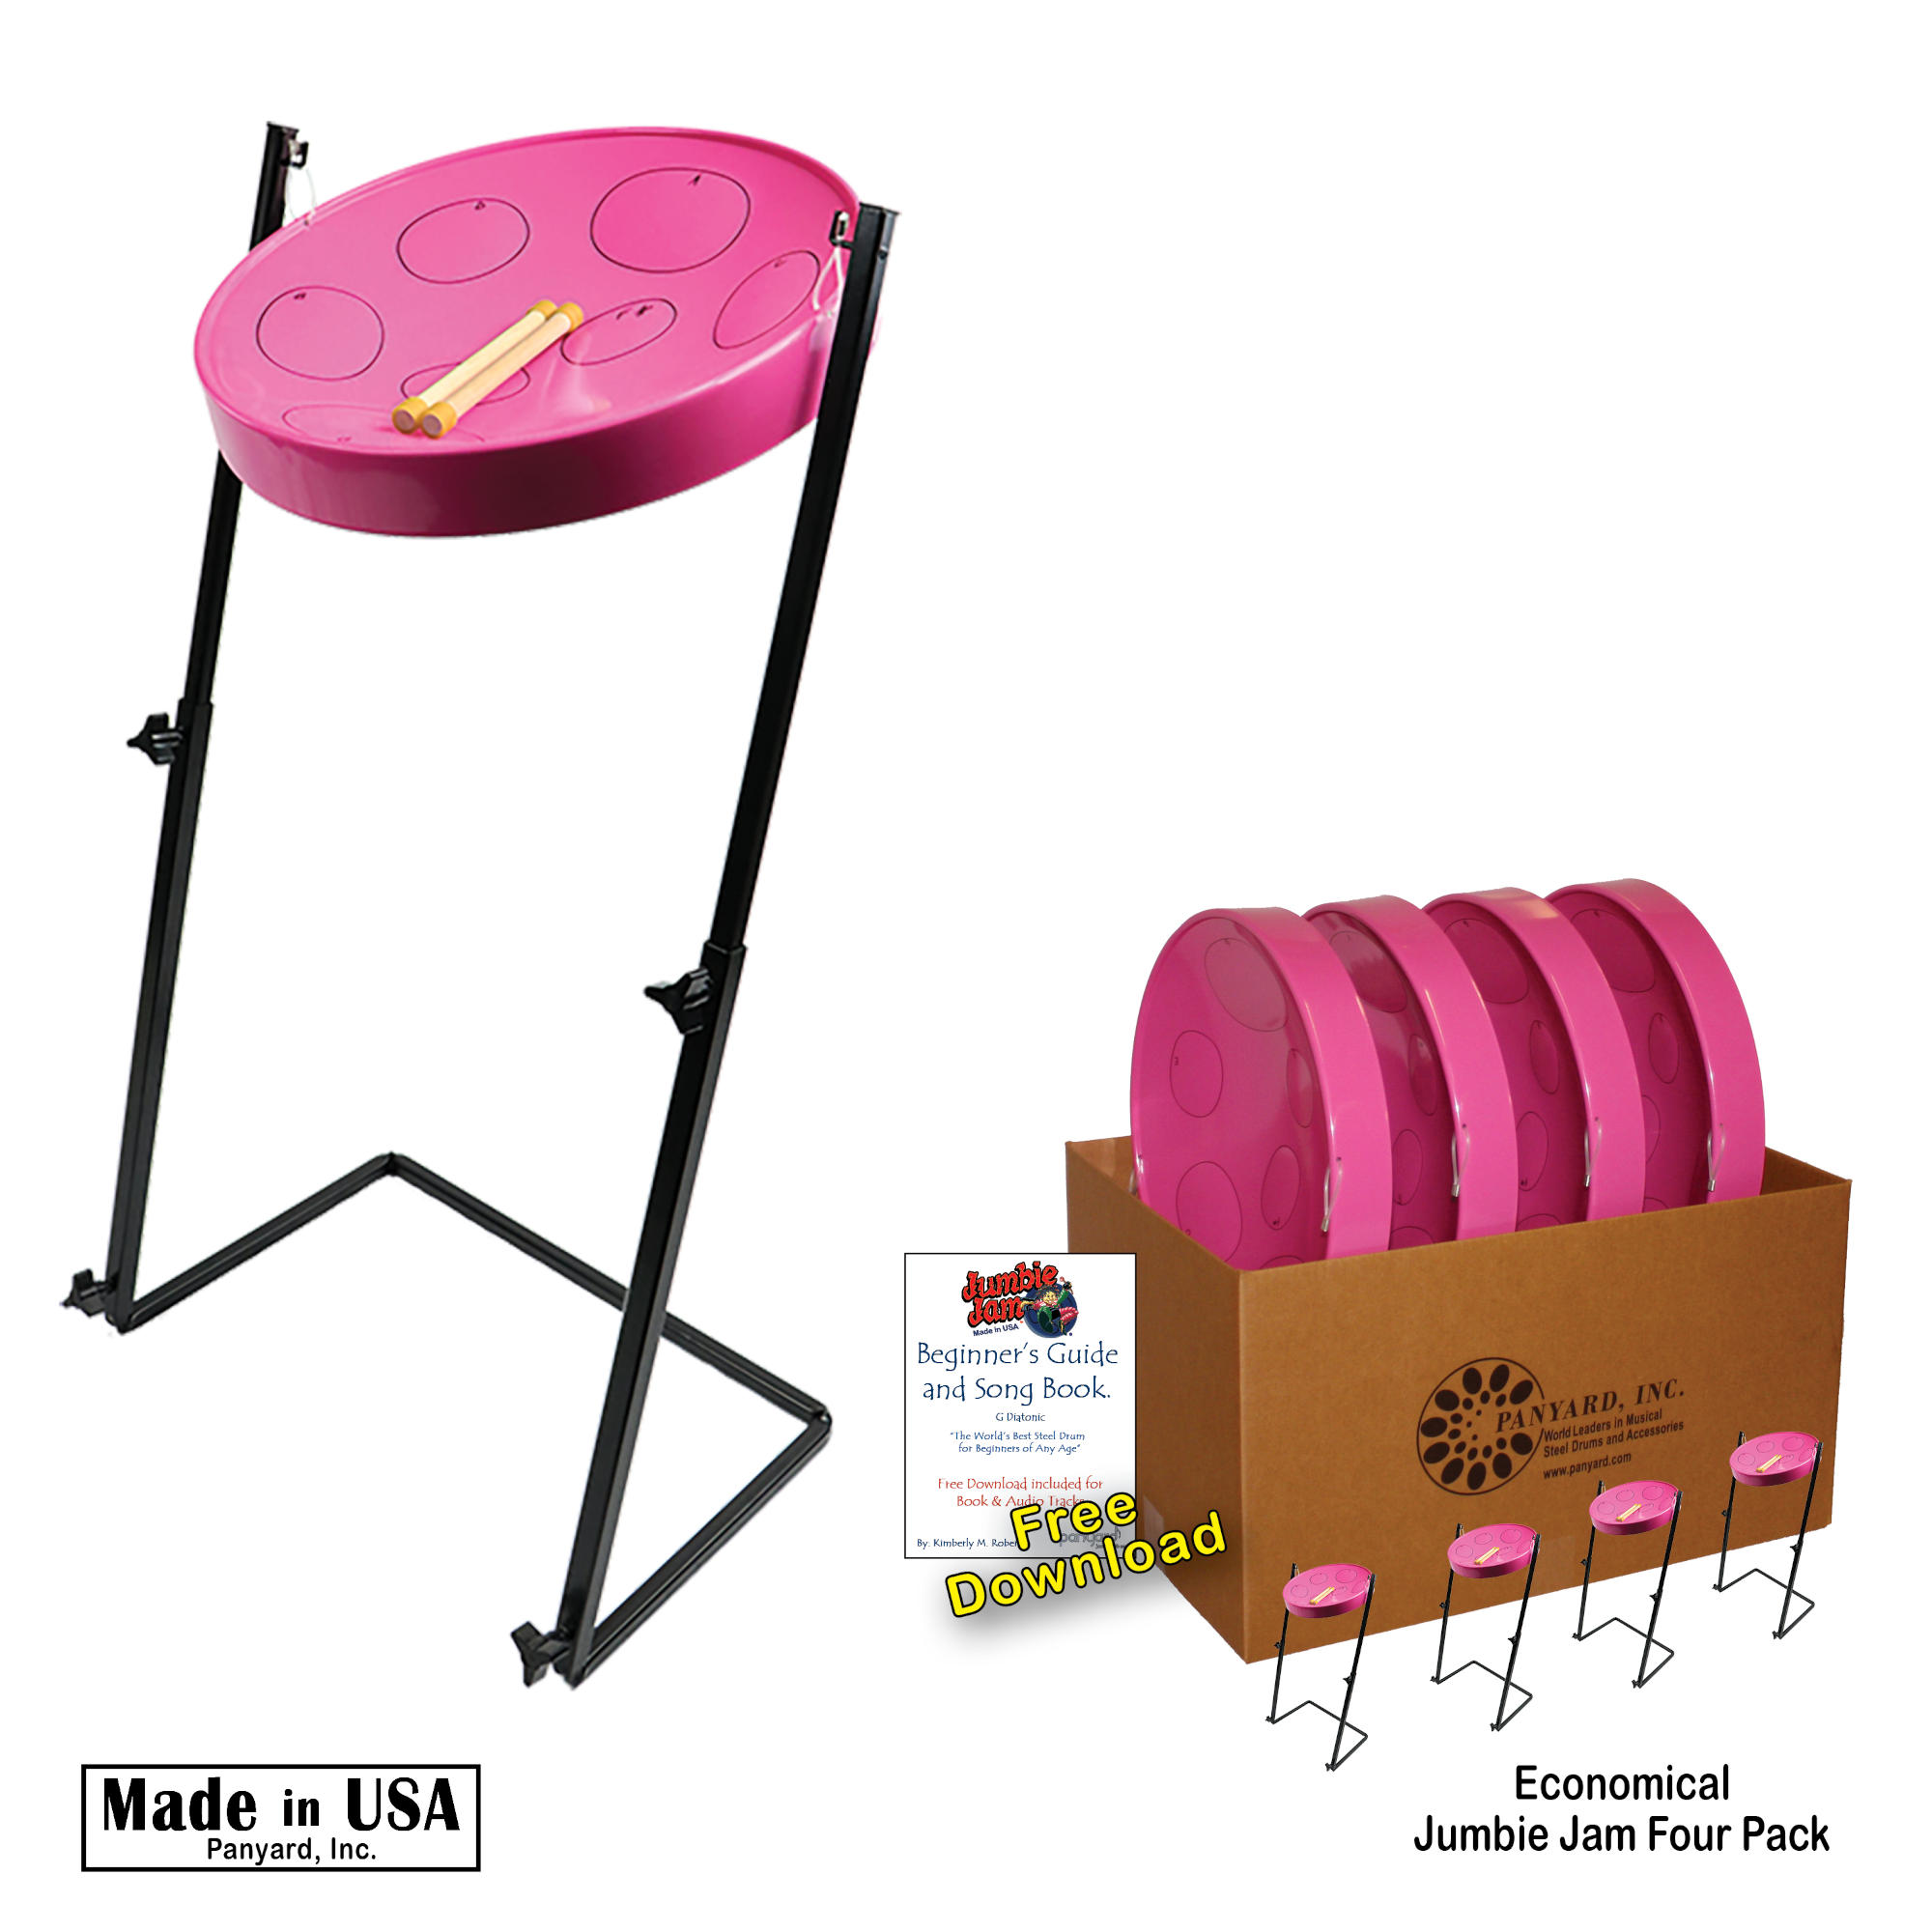 Panyard Jumbie Jam Steel Drum Educators 4-Pack - Metal Z-Floor Stands - Pink Pan (G)